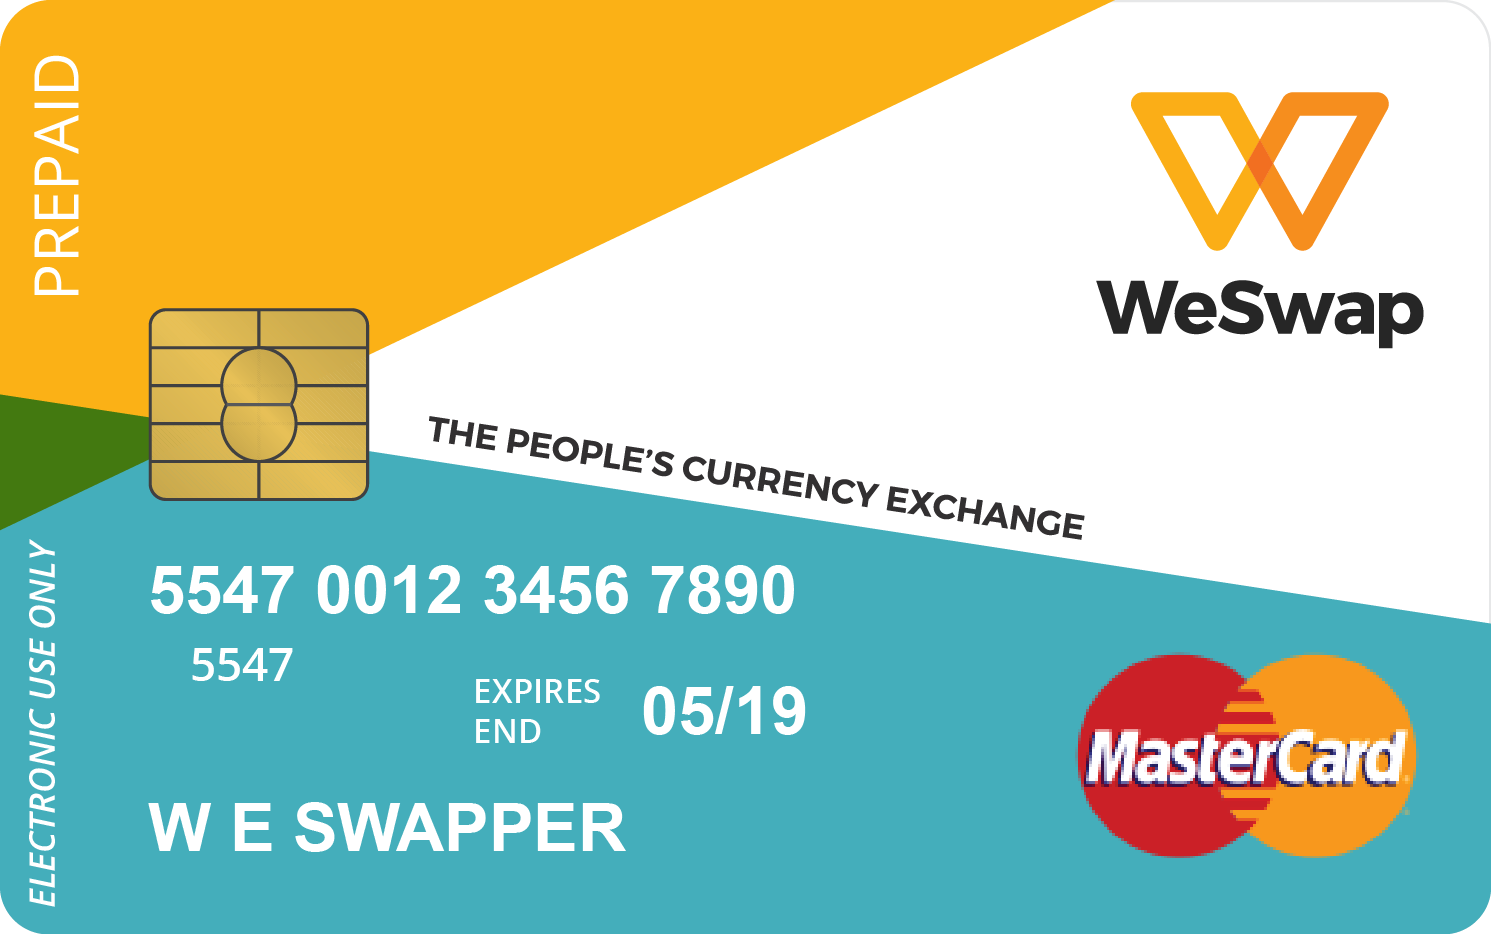 WeSwap Mastercard® Travel money card